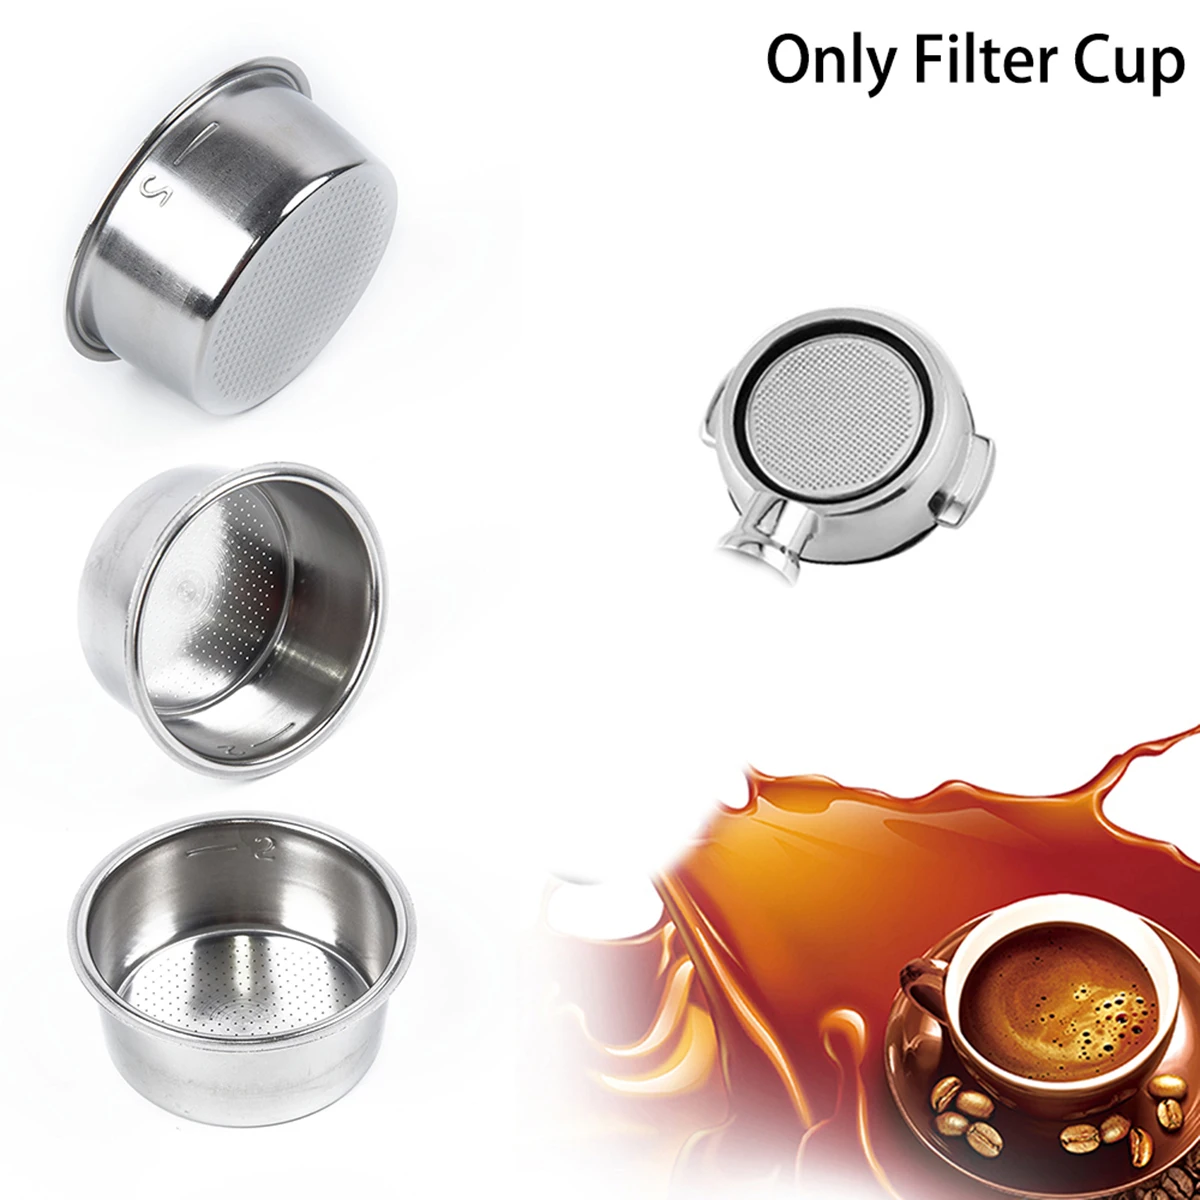 1 * Filter šalica za kavu 51 mm, bez filter košara pod pritiskom za Breville Delonghi aparat Krups potpuno Novi i kvalitetan Slika 4